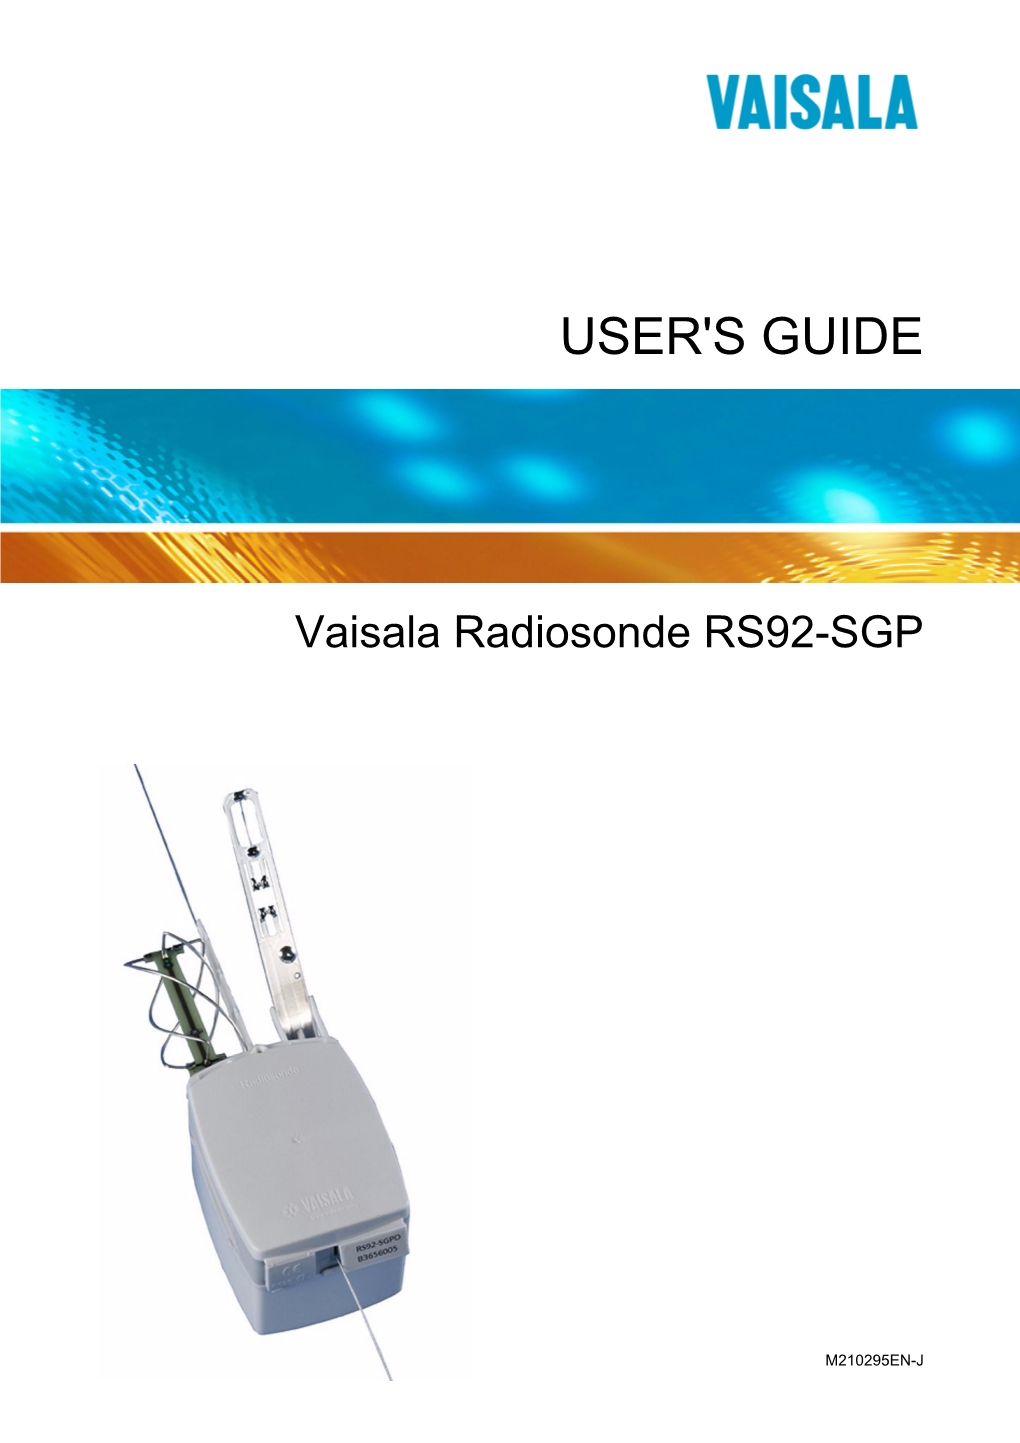 Vaisala Radiosonde RS92-SGP User's Guide